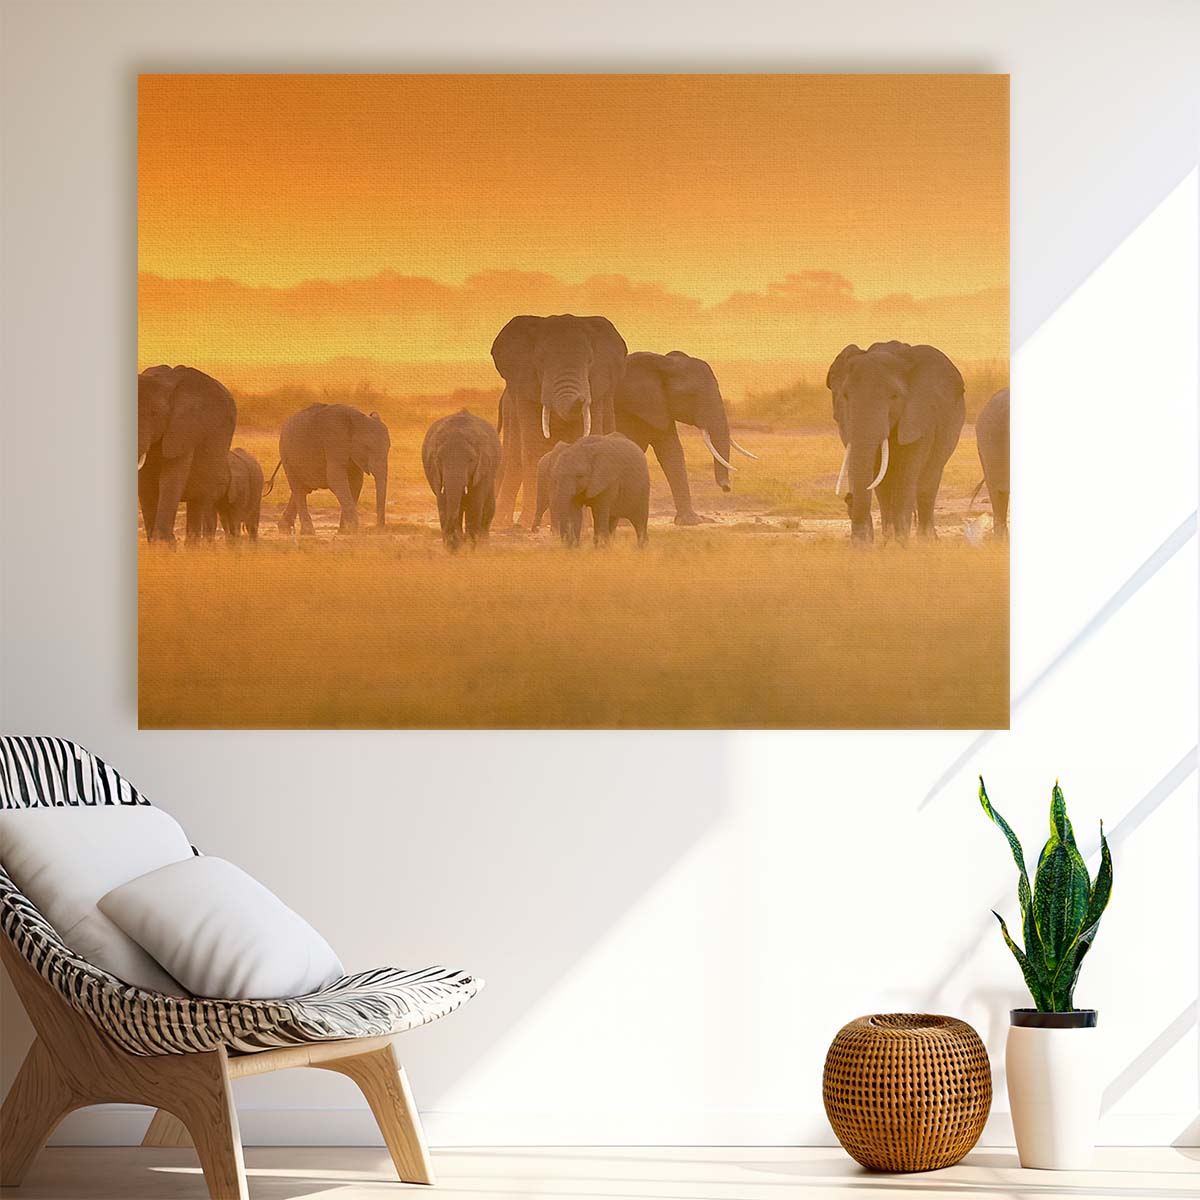 Majestic Amboseli Elephant Herd Sunset Panorama Wall Art by Luxuriance Designs. Made in USA.